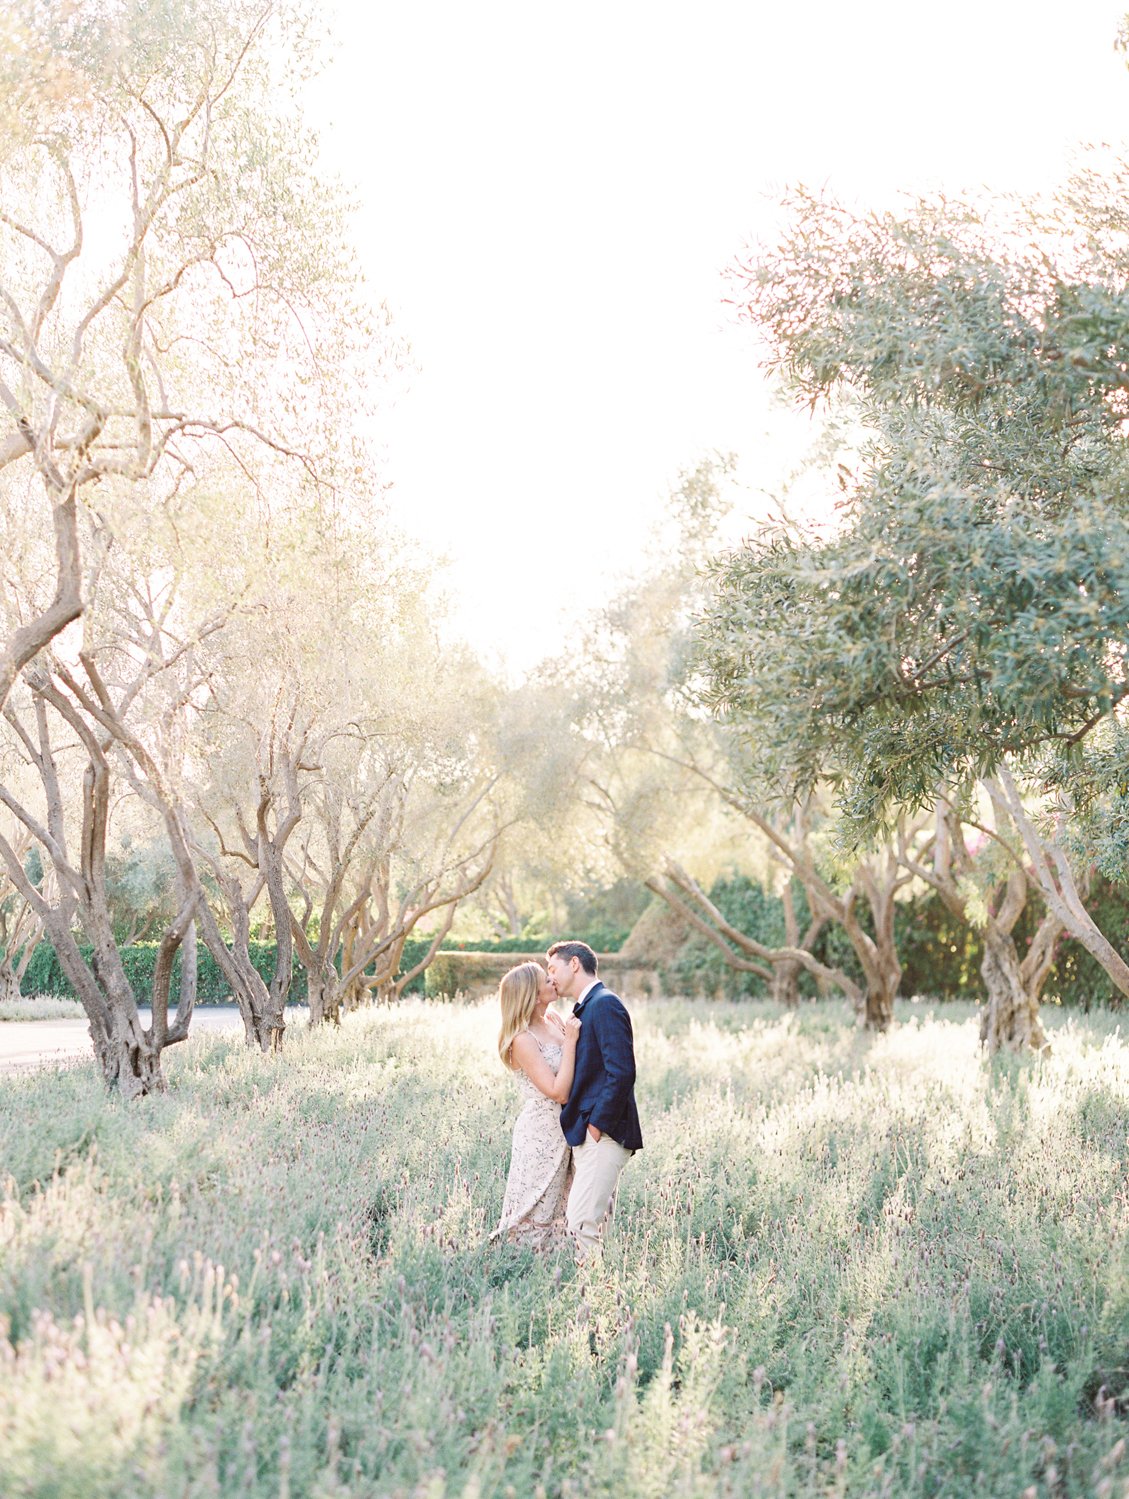 wisteria-photography.com | Wisteria Photography | San Ysidro Ranch | Weddings Engagement | Southern California Photographer-15.jpg